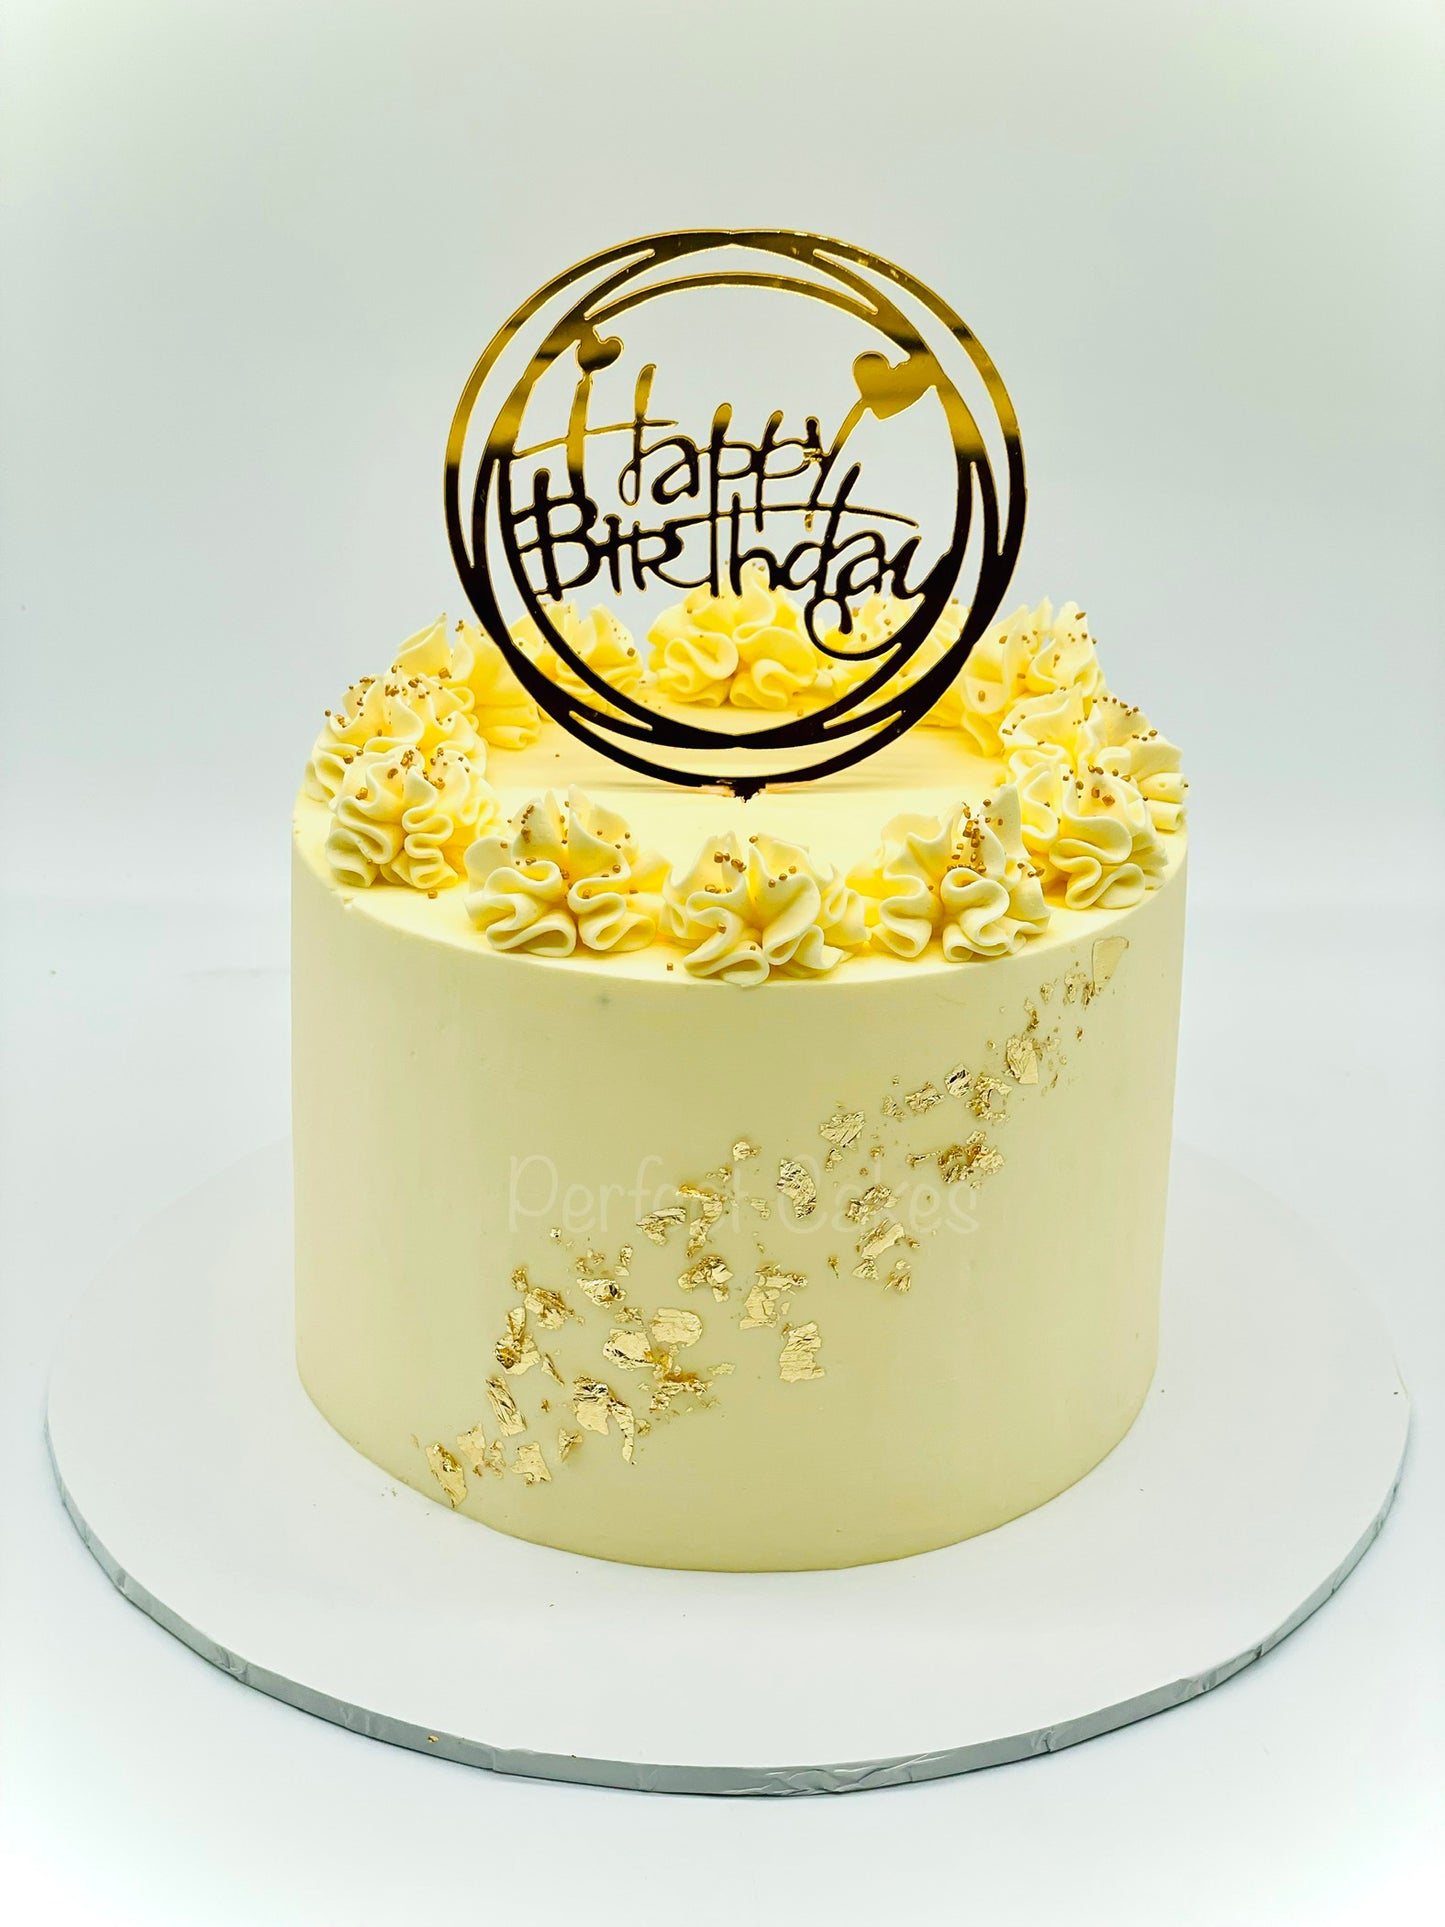 Wedding Cake Design Pro: 3-D Cake Design Software | eBay